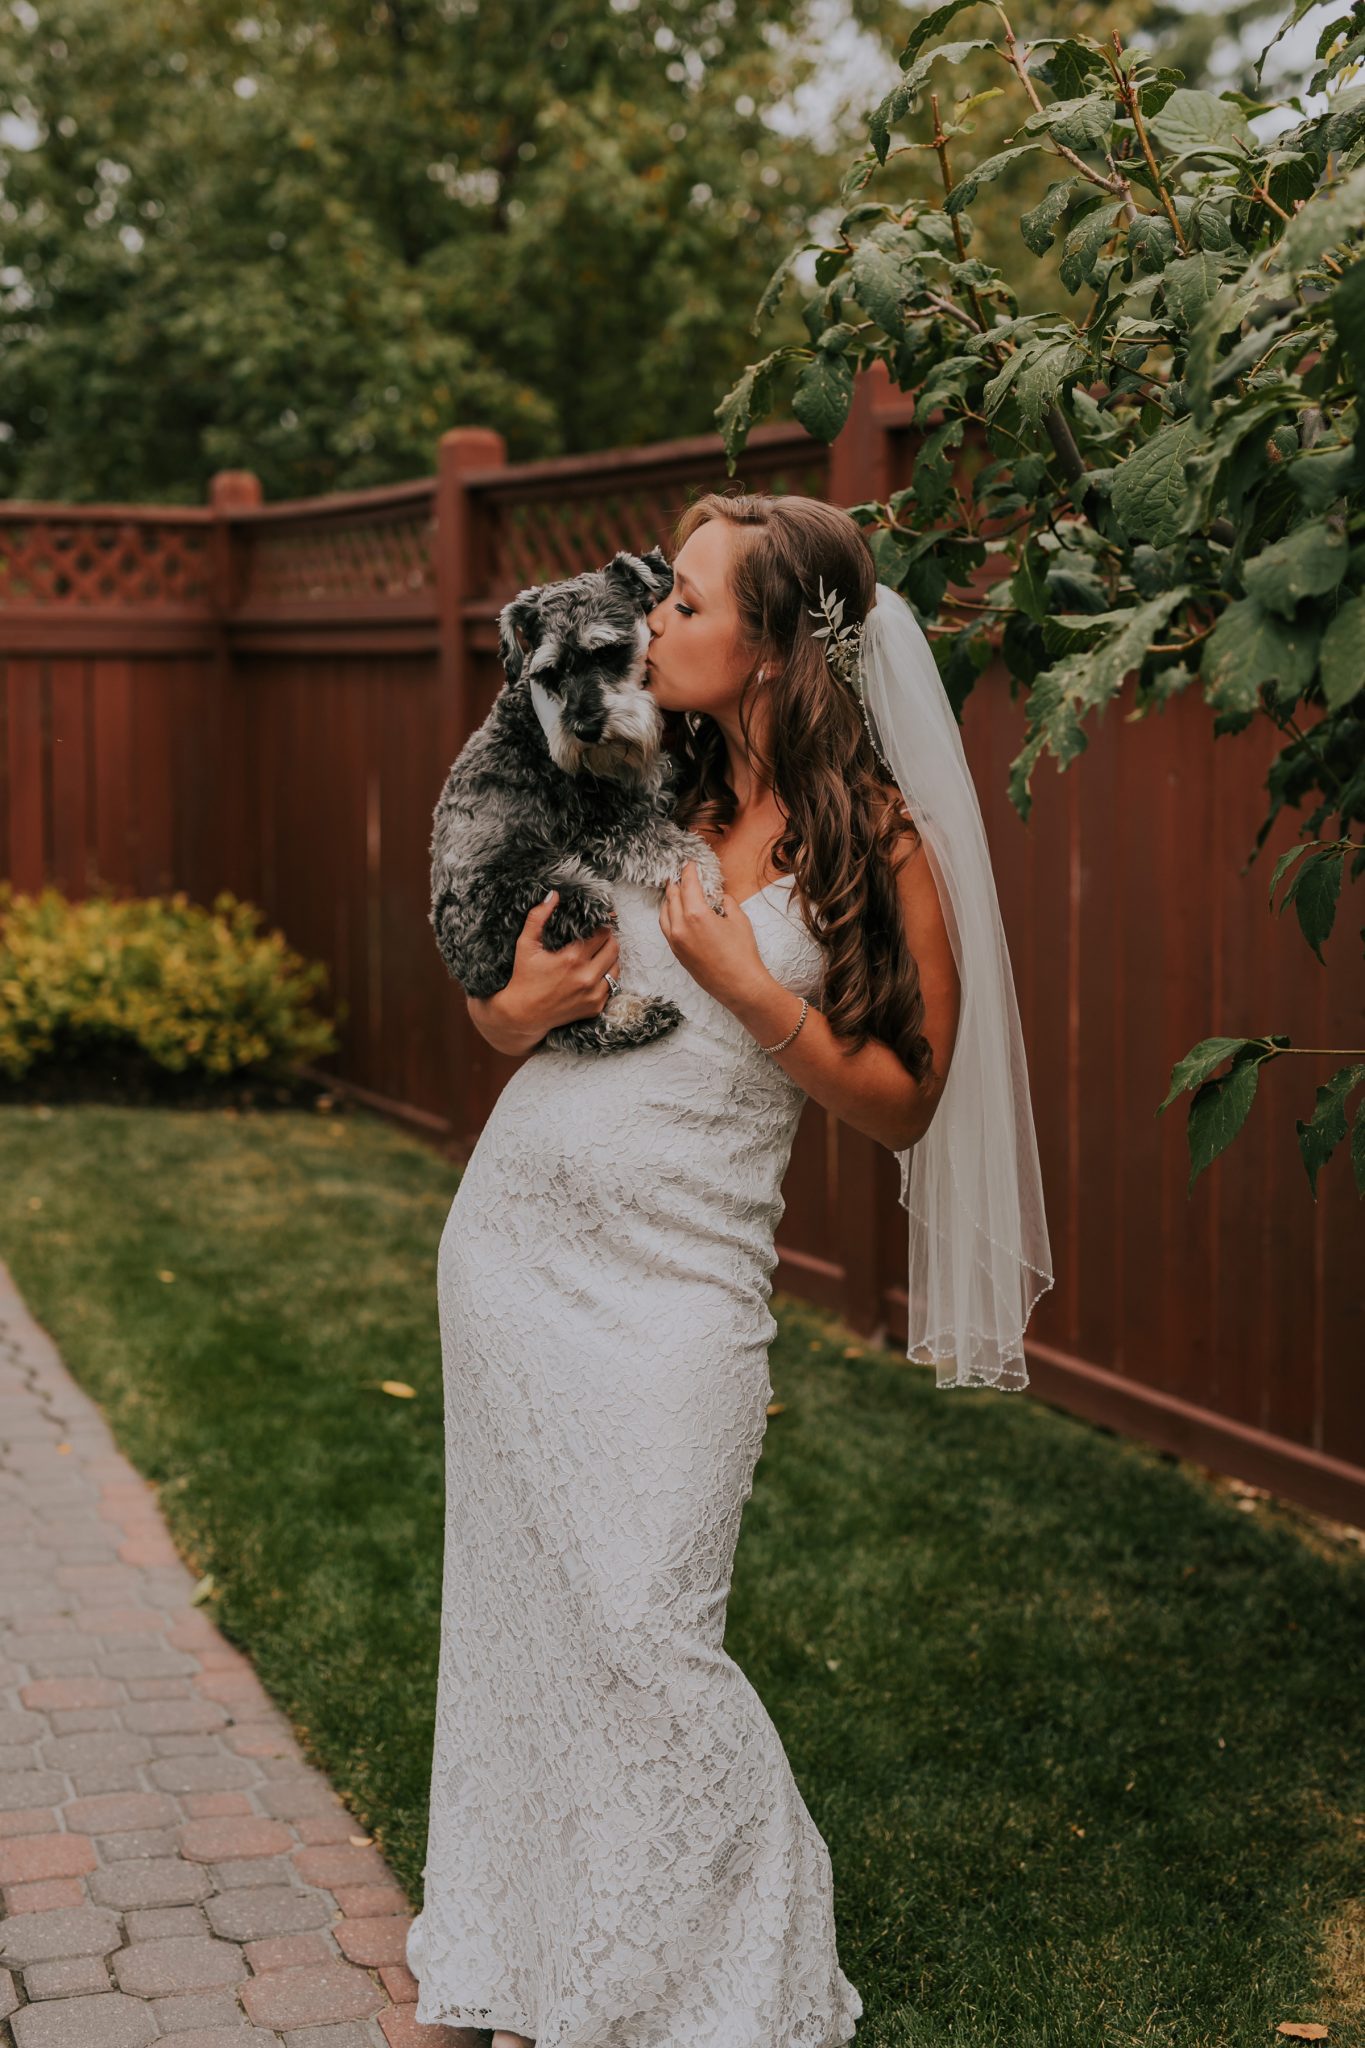 Bride and her dog on her wedding day, bridal portrait, wedding dress